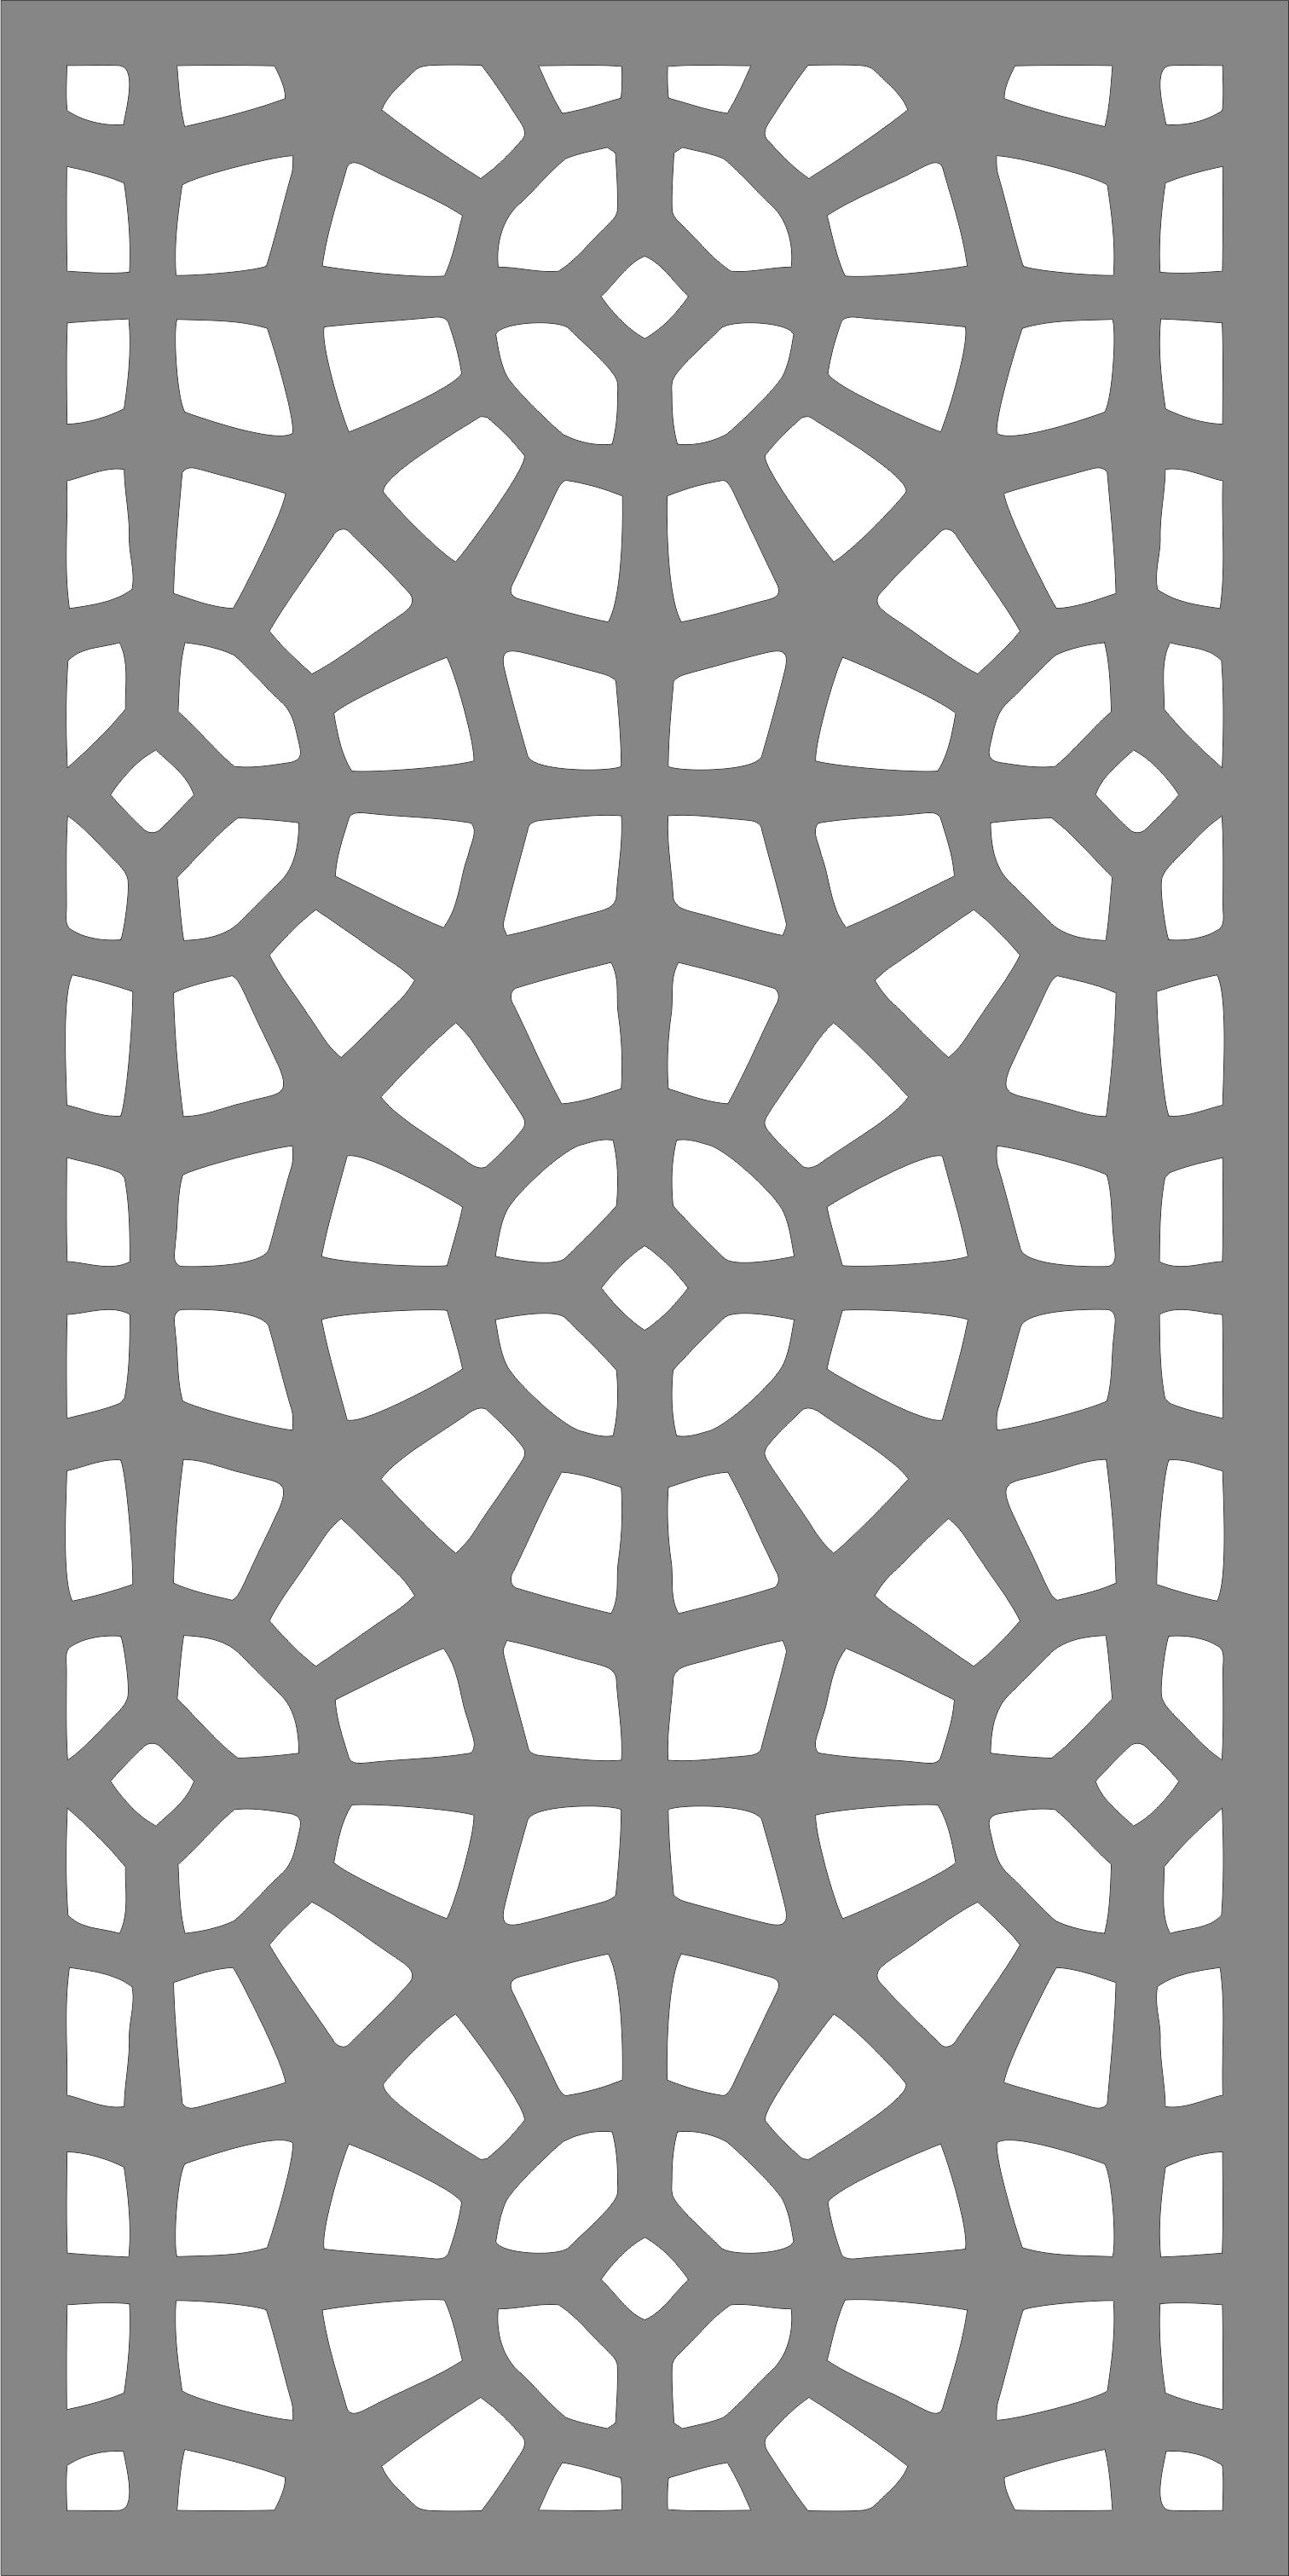 Room Partition Circular Baffle Pattern Free CDR Vectors Art